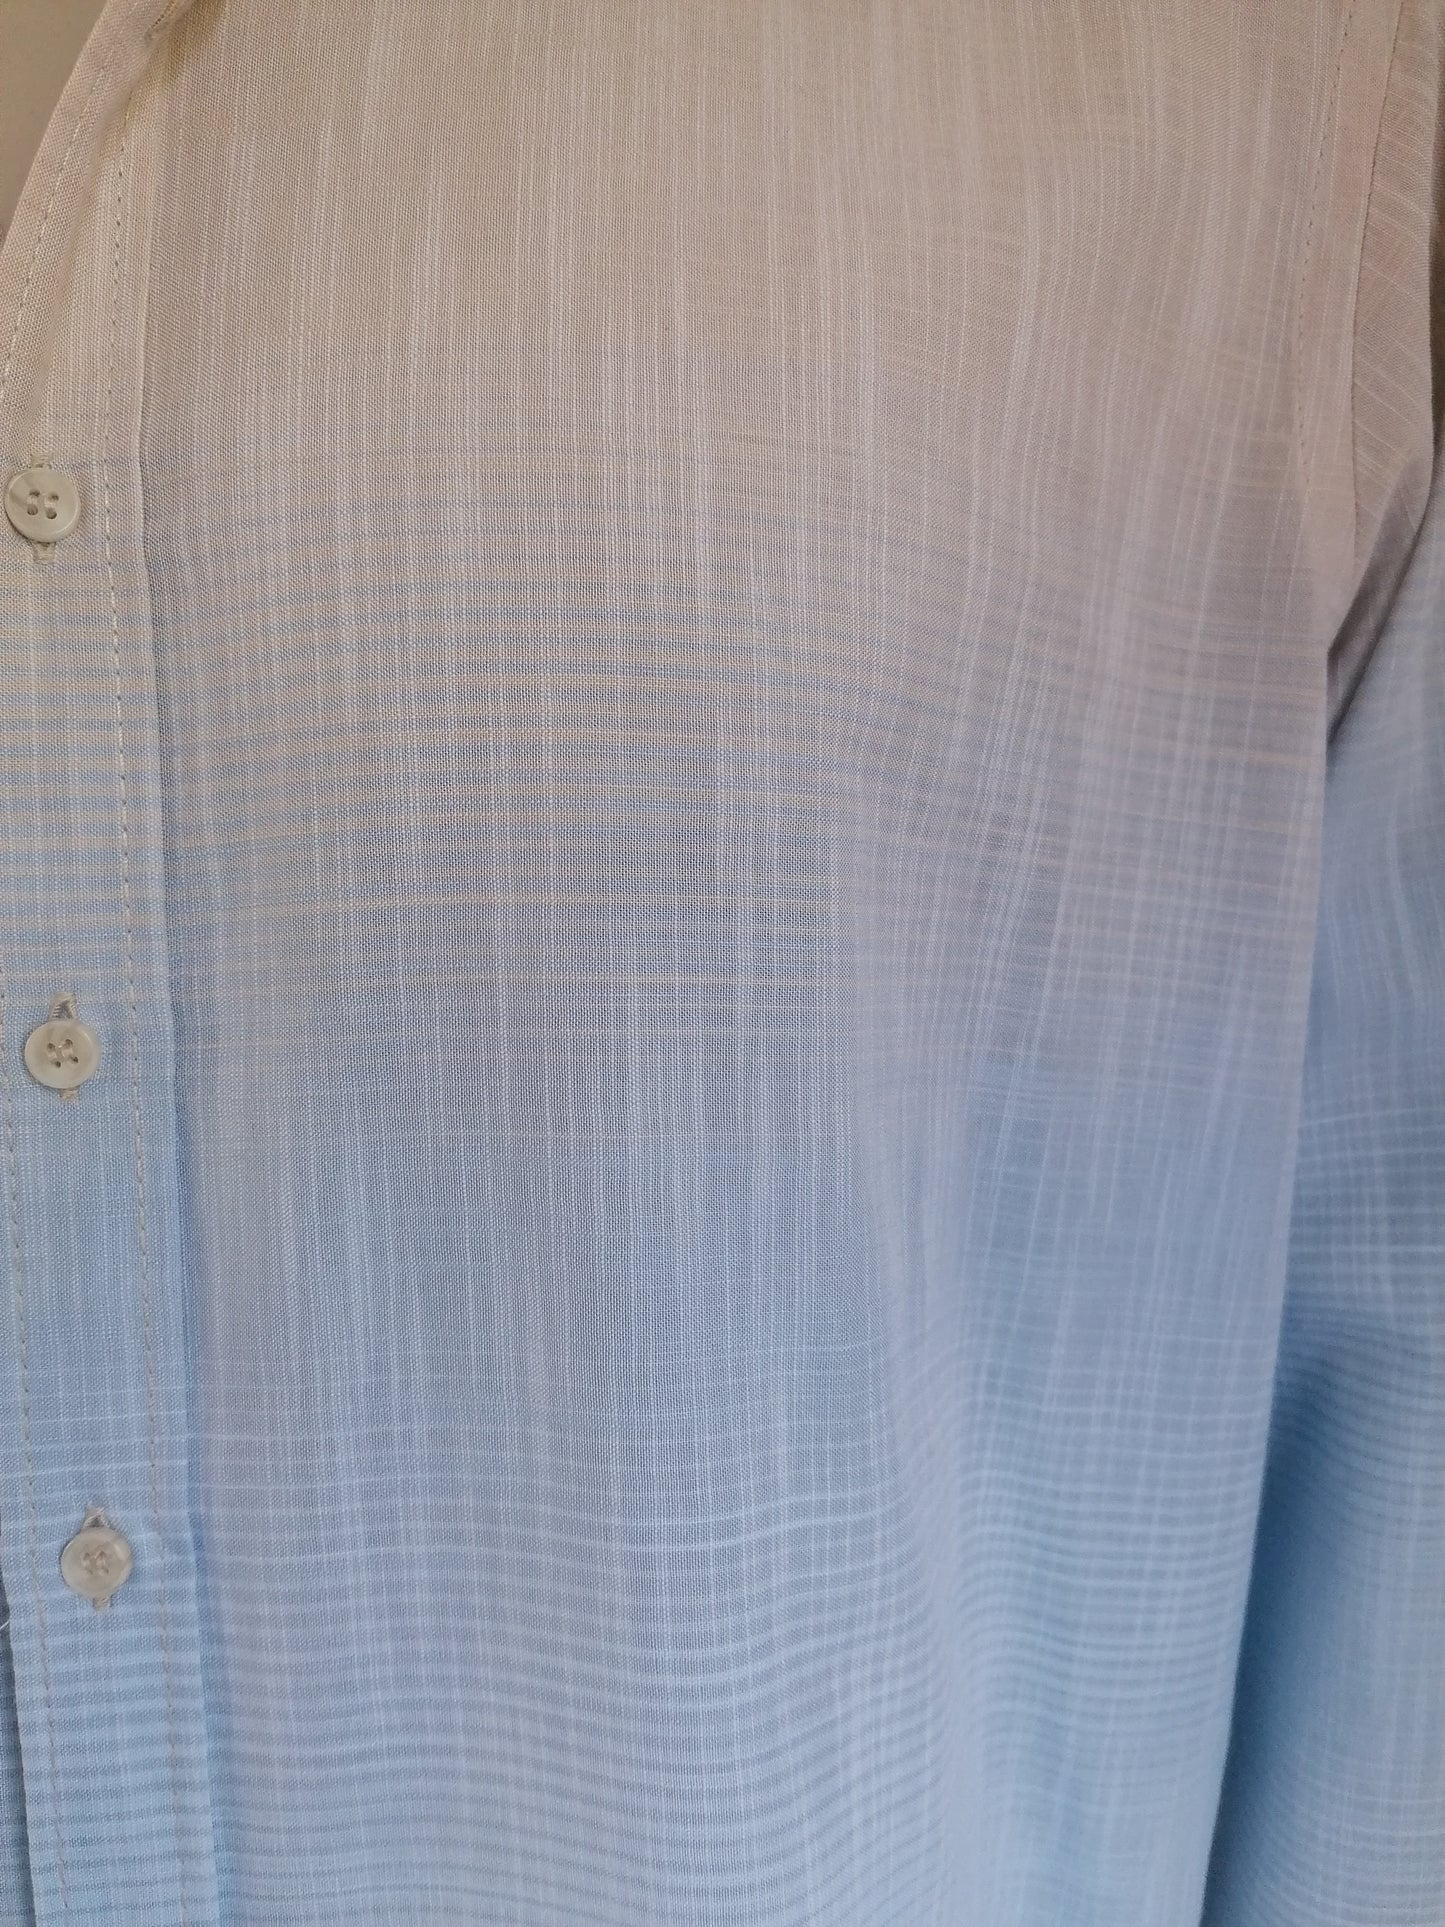 Camisa de Marvelis. Motivo azul beige. Tamaño XXL / 2XL.